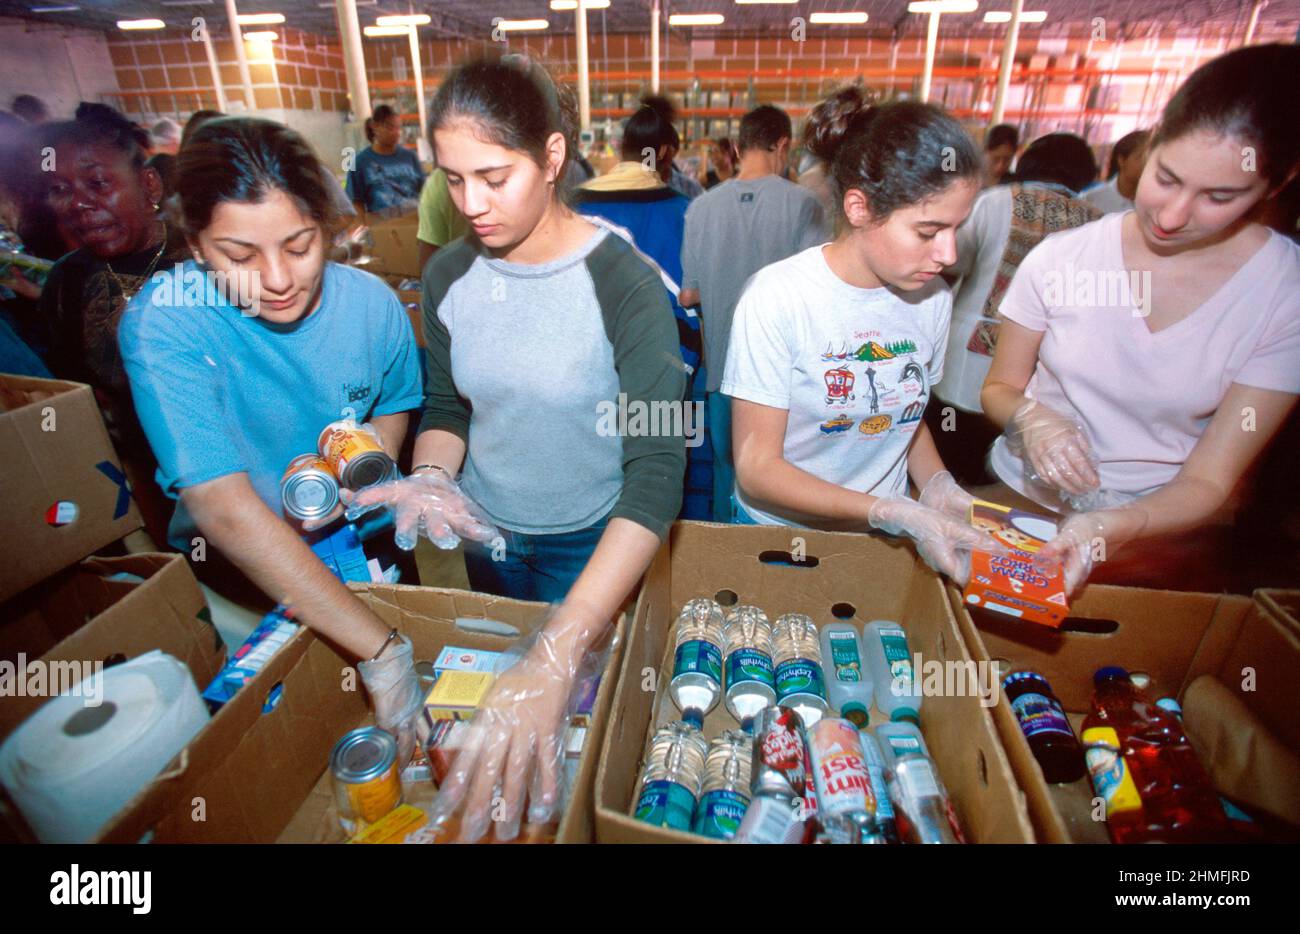 Miami Florida,Daily Bread Food Bank girls,teen teens teenagers students volunteer volunteers sorting food donations Stock Photo